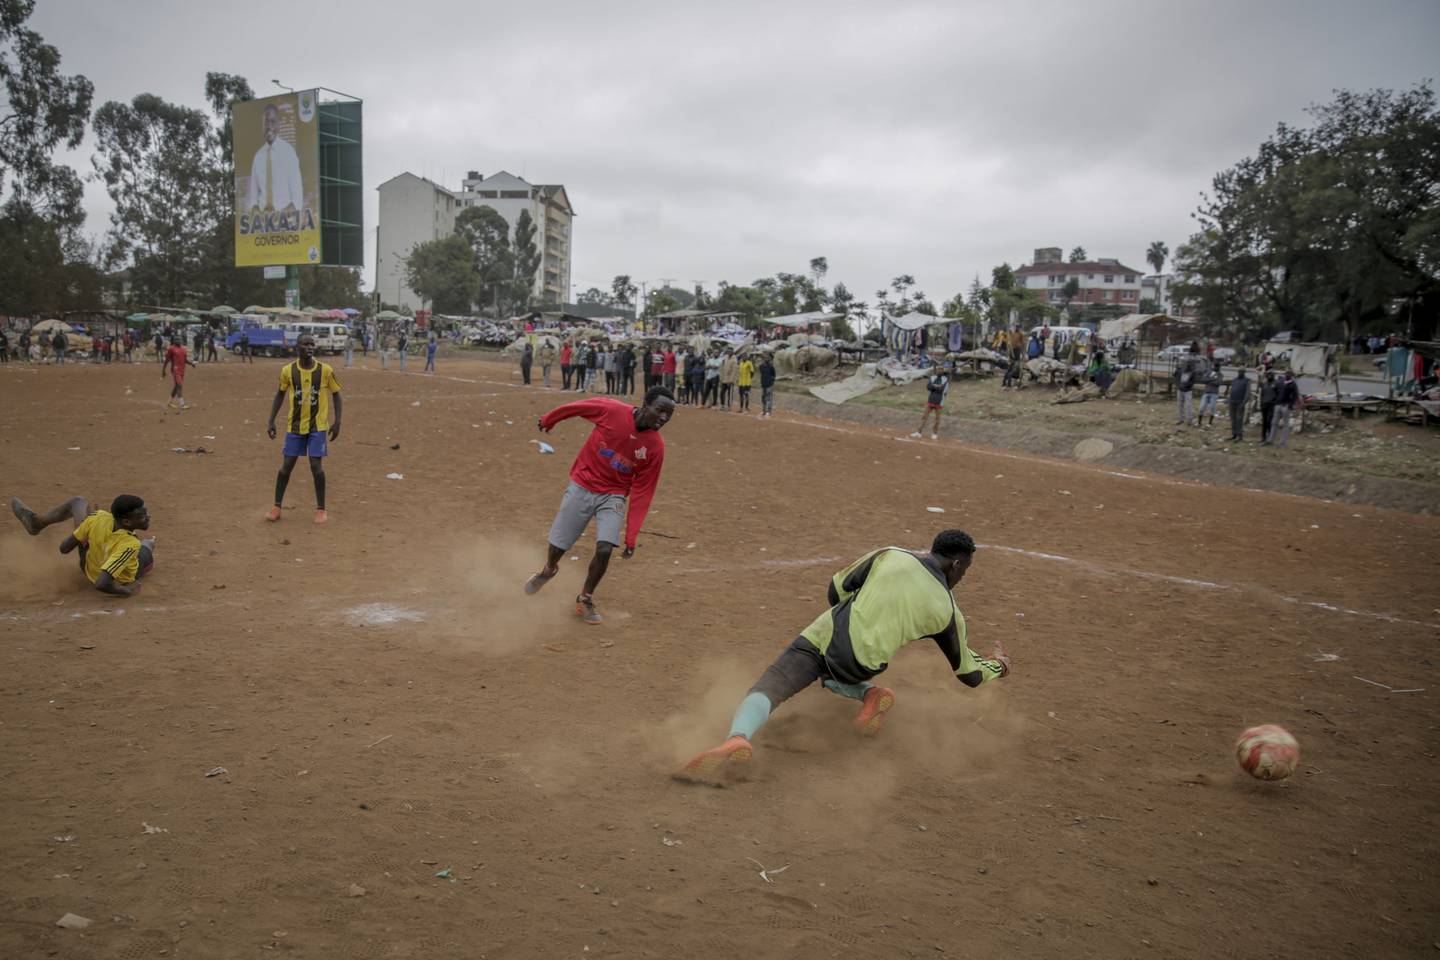 FOTBALL: Ungdom spiller fotball i Kibera, et lavinntektsnabolag i Nairobi.